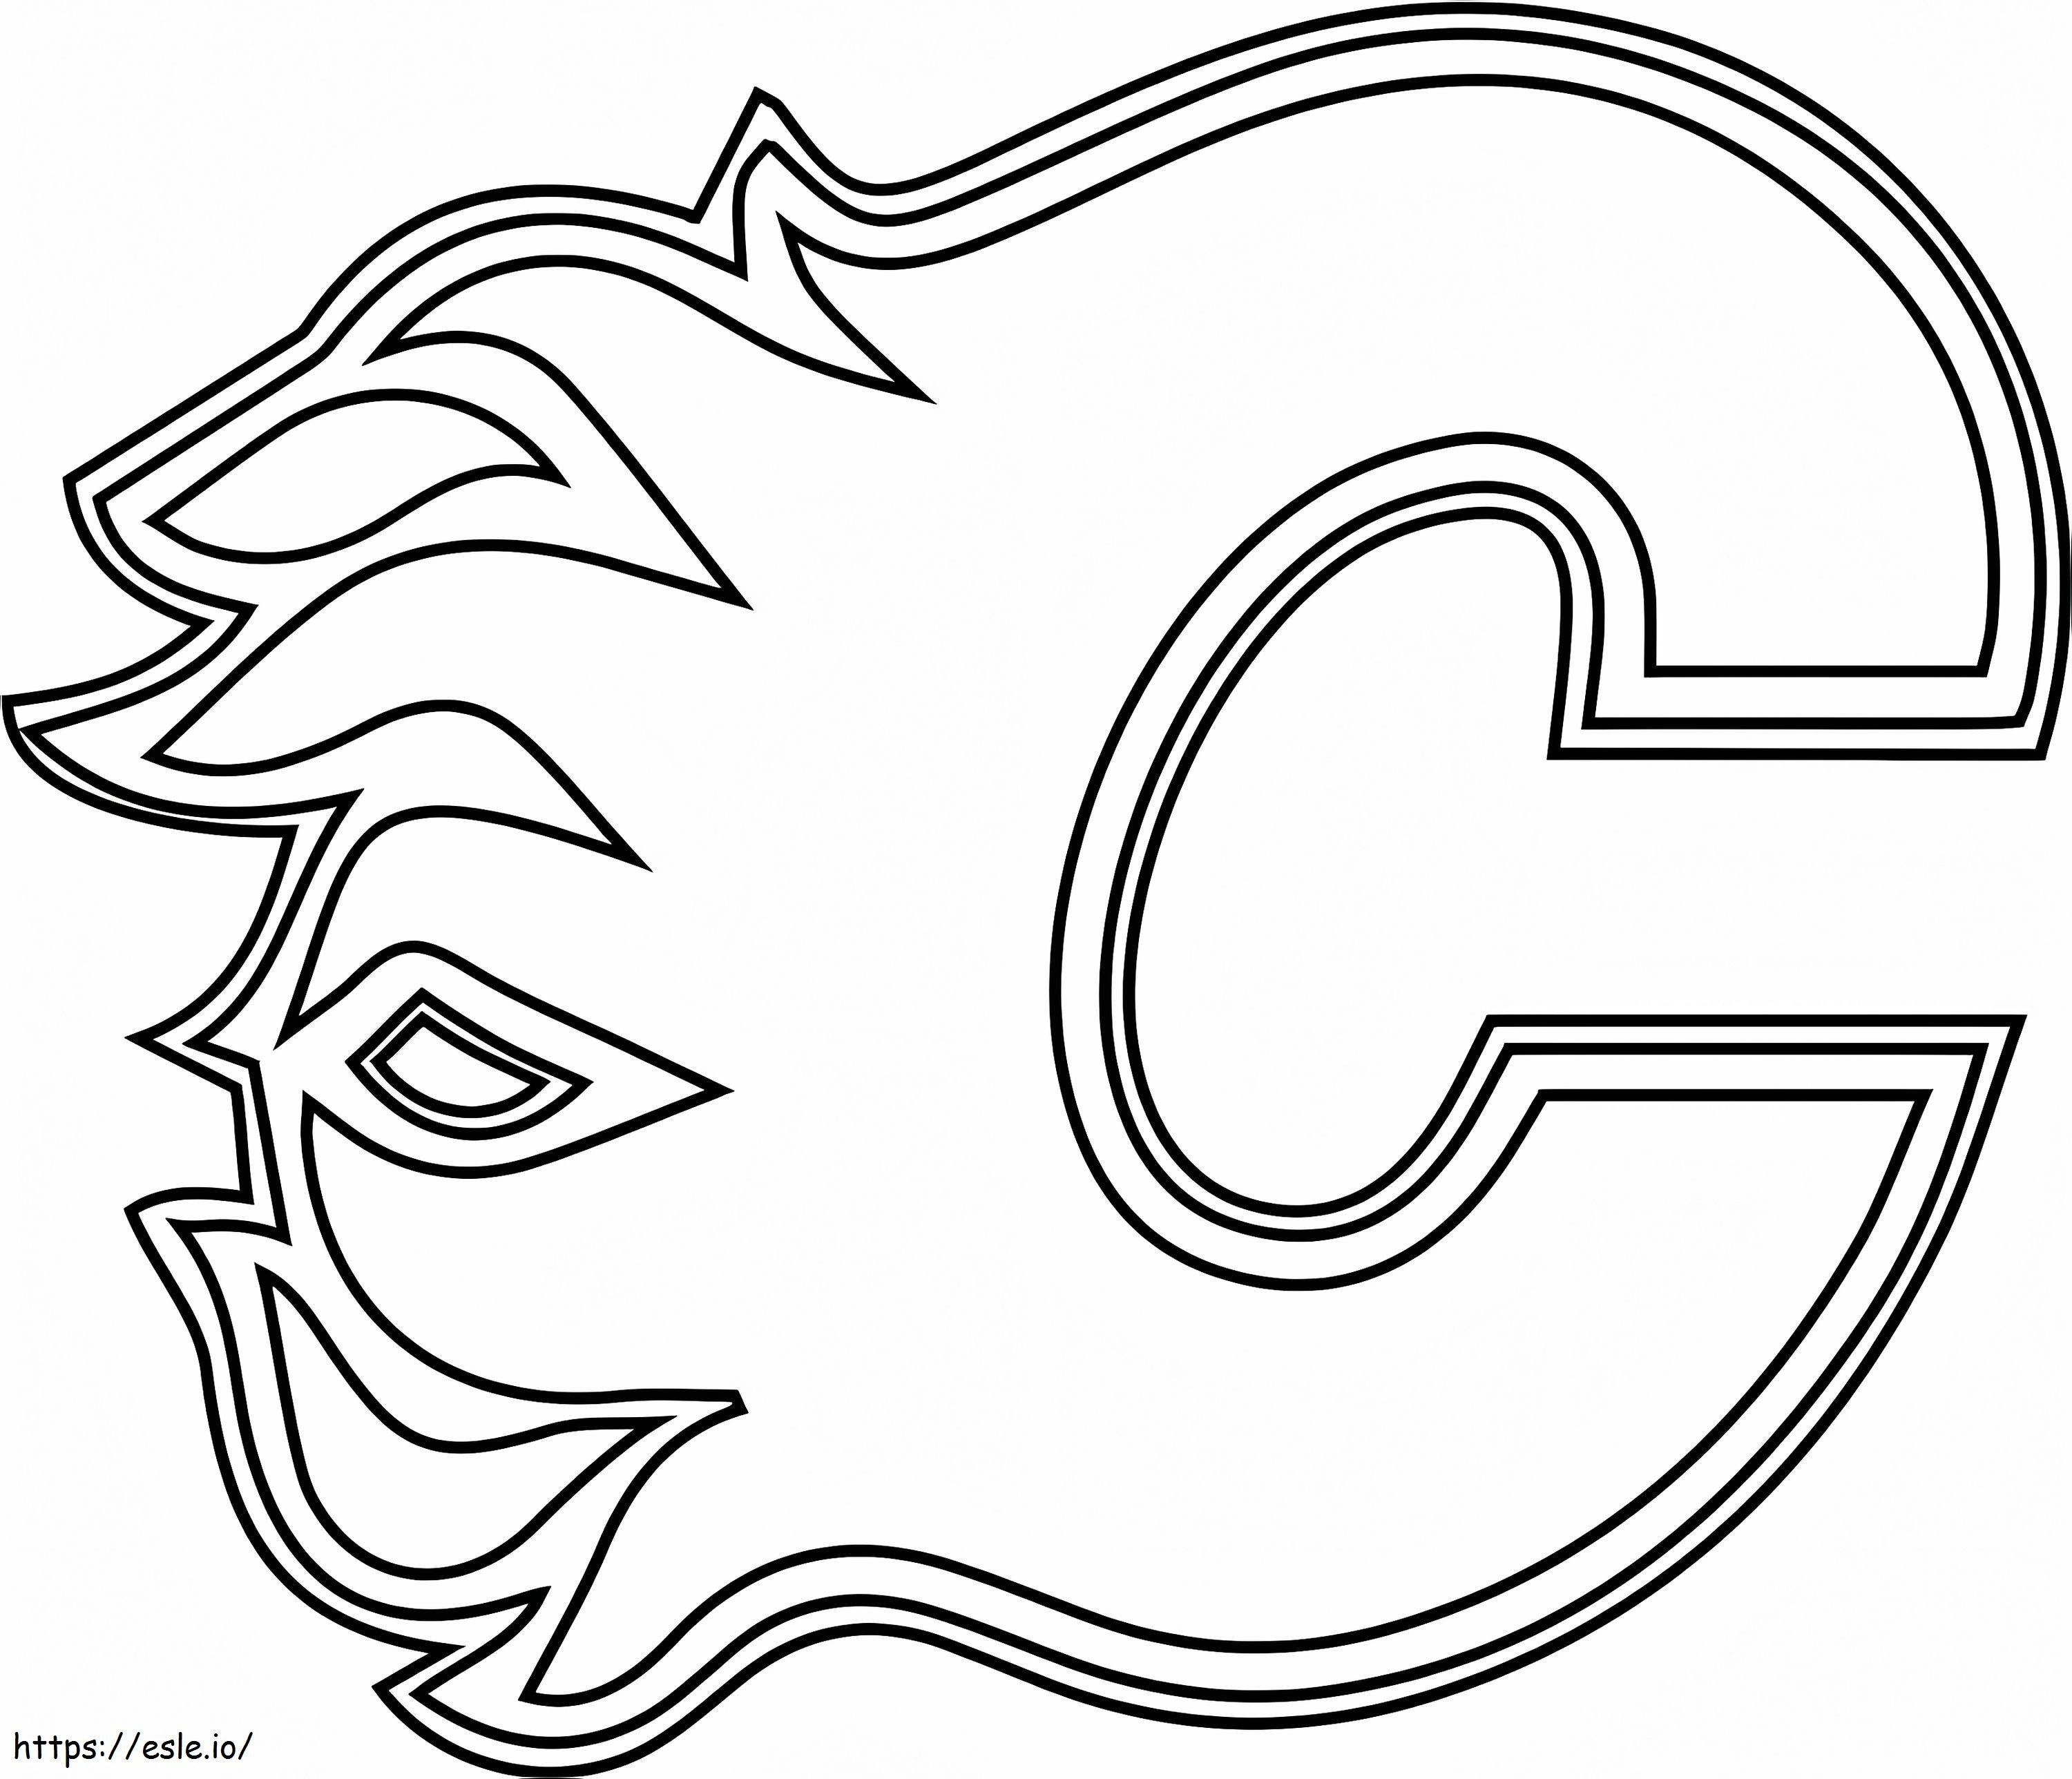 Calgary Flames Logo coloring page